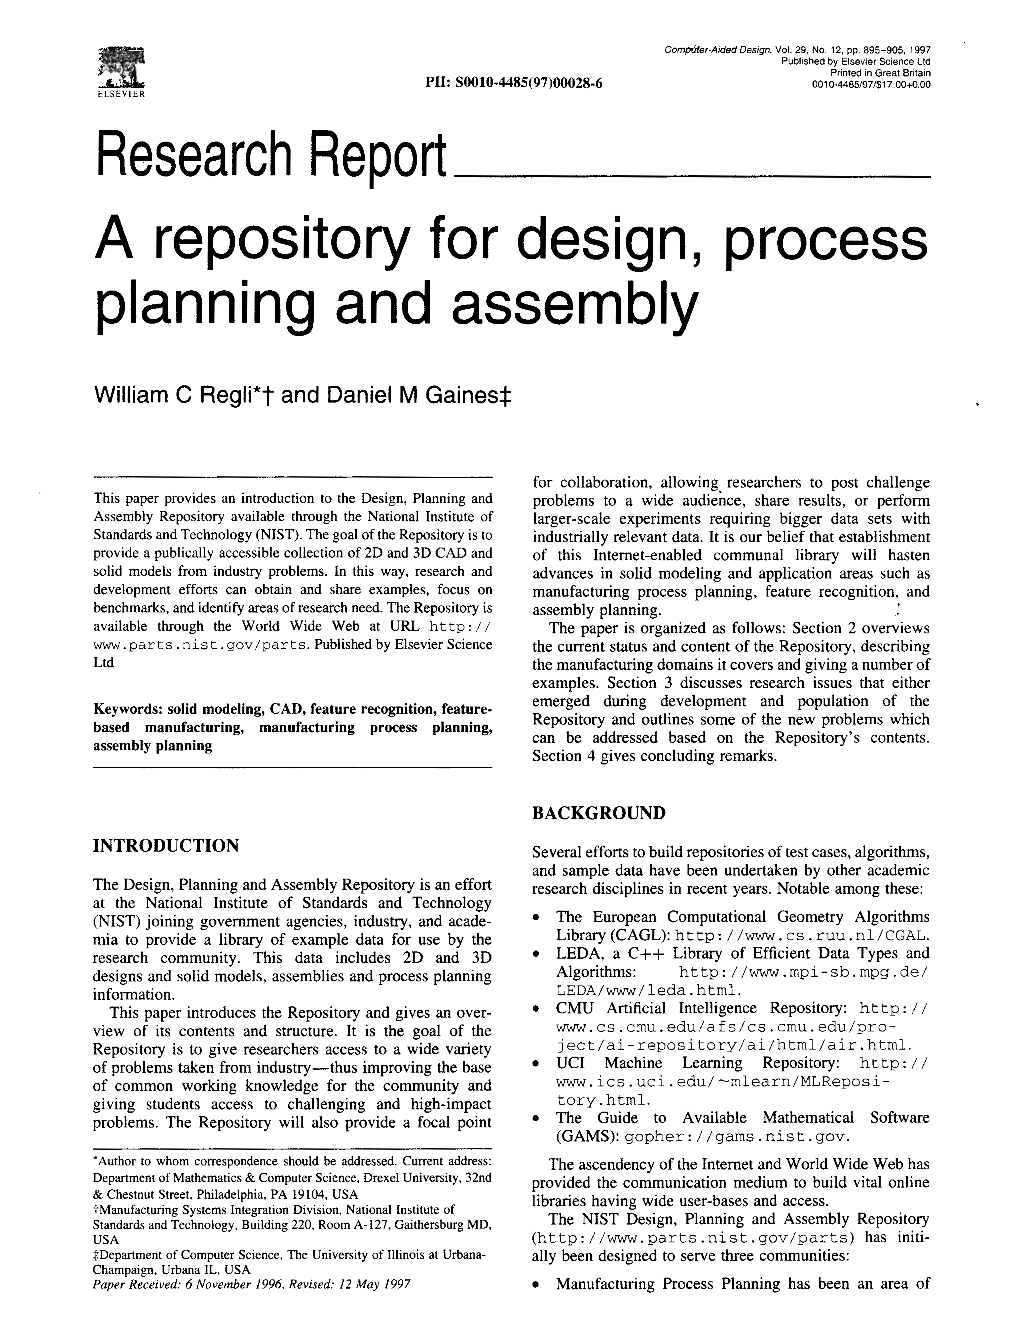 Repository for Design 1997 2